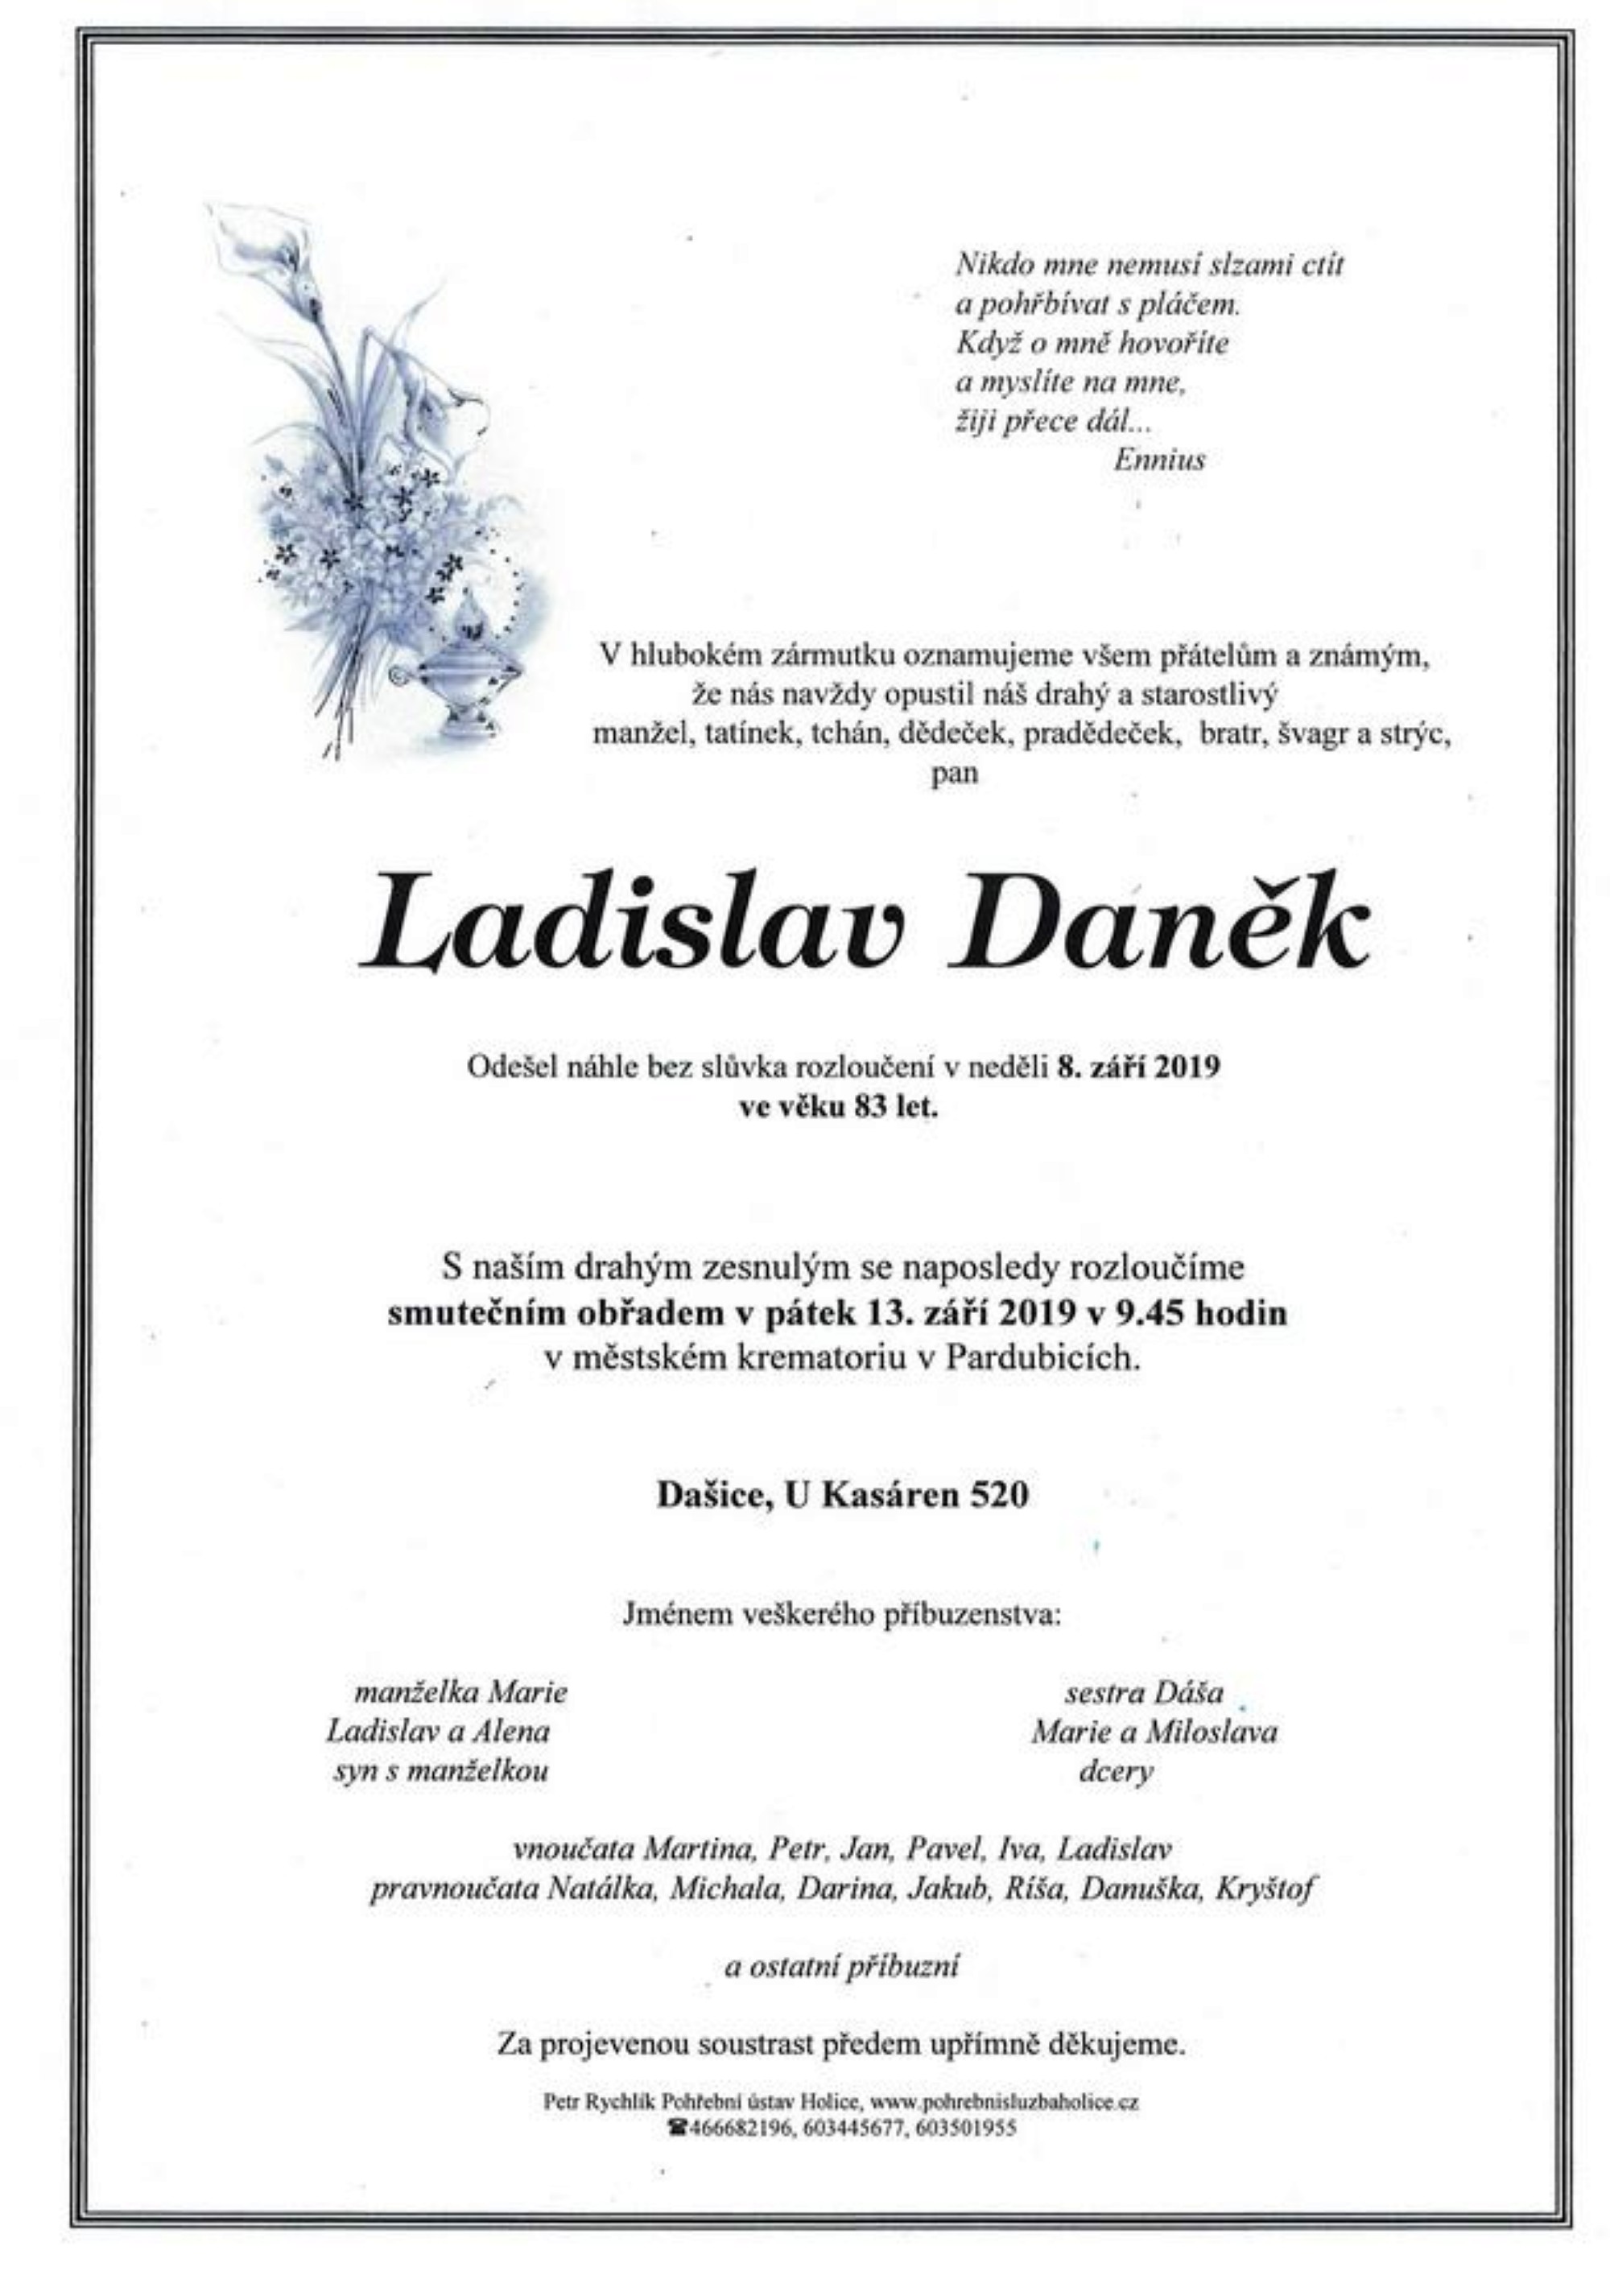 Ladislav Daněk